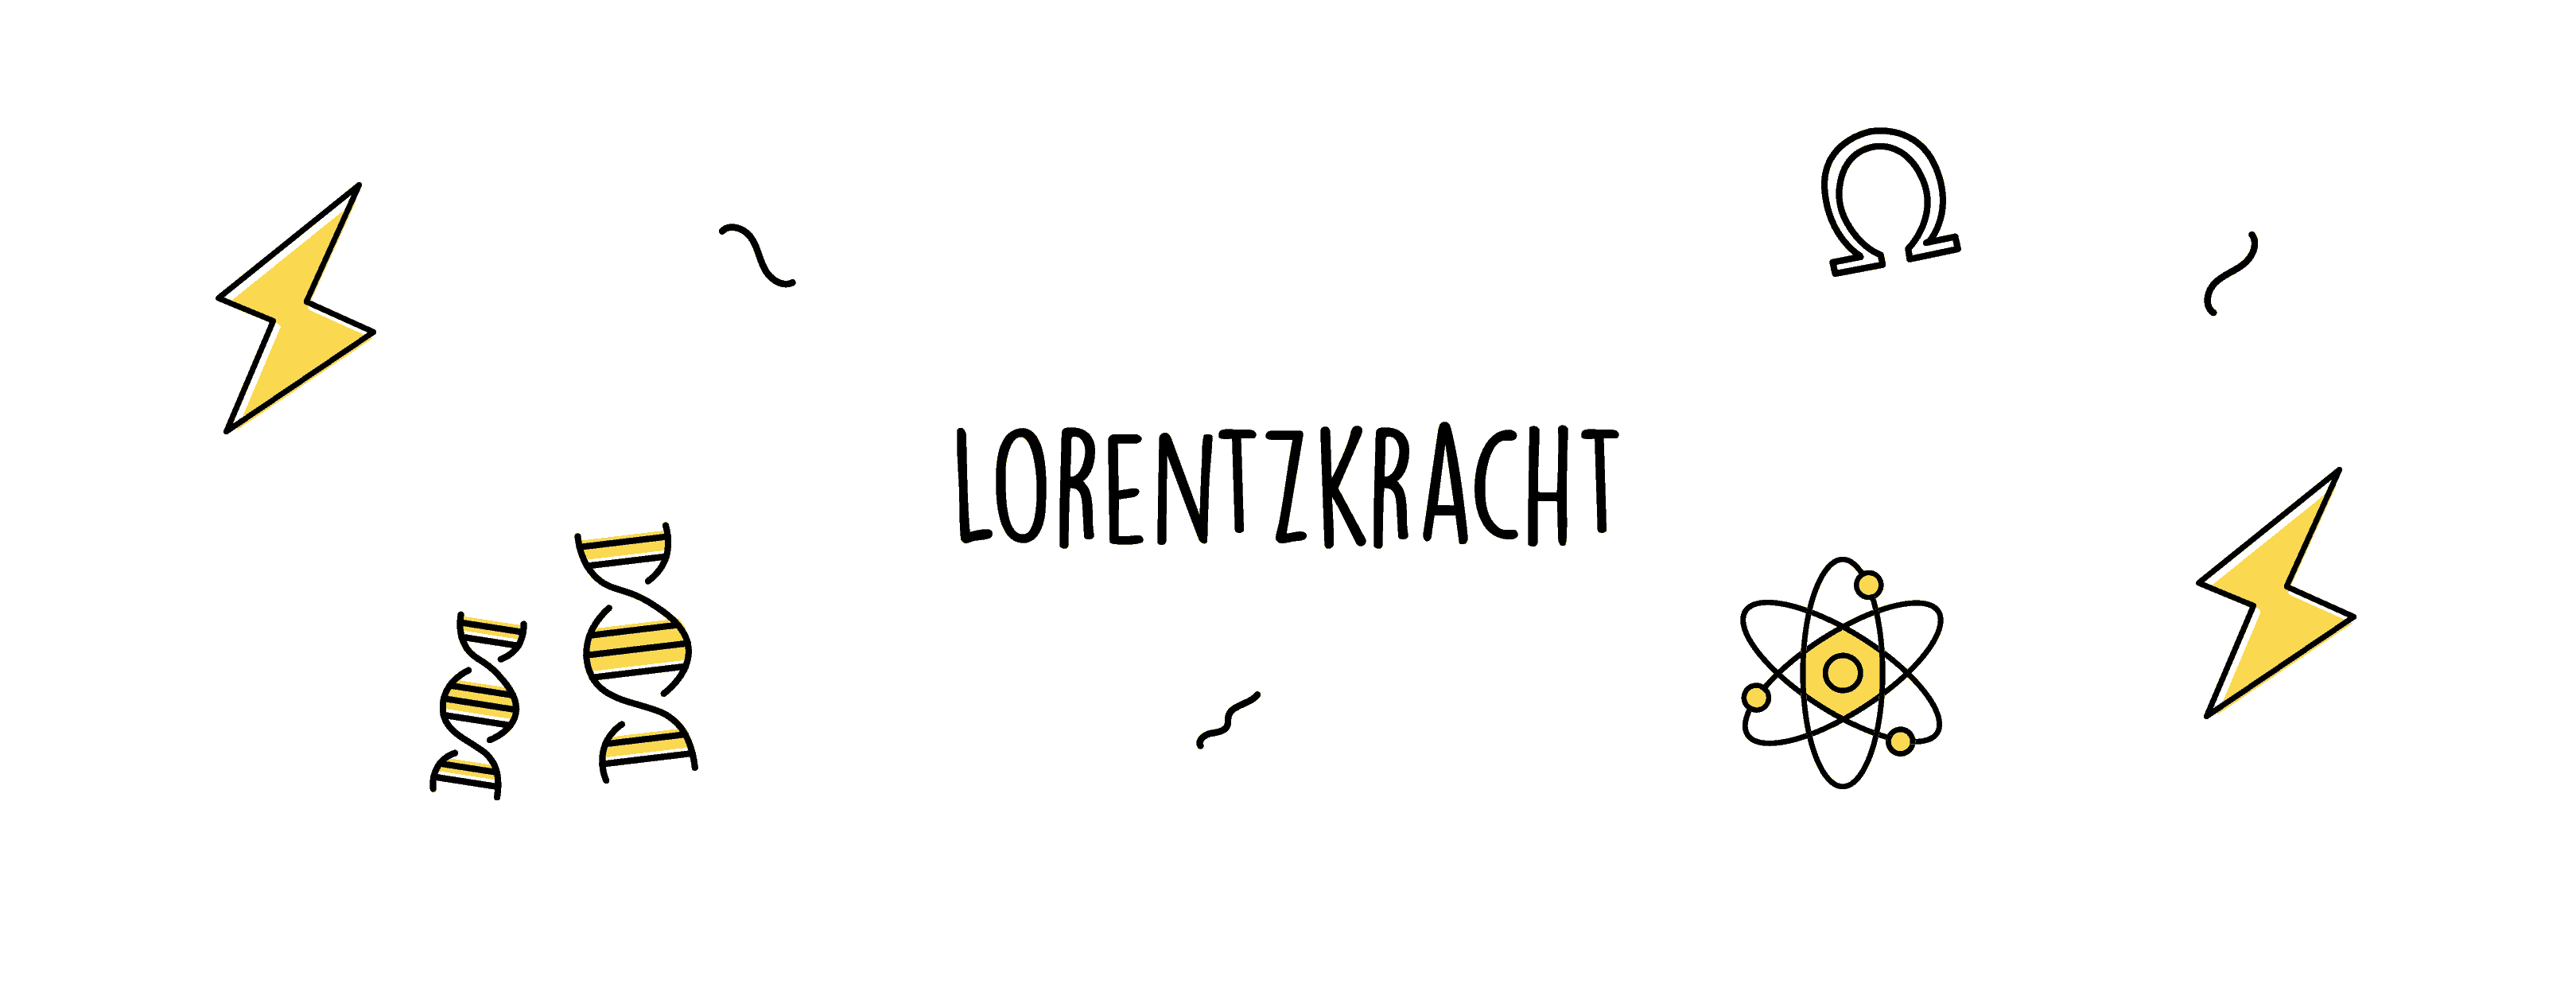 Lorentzkracht